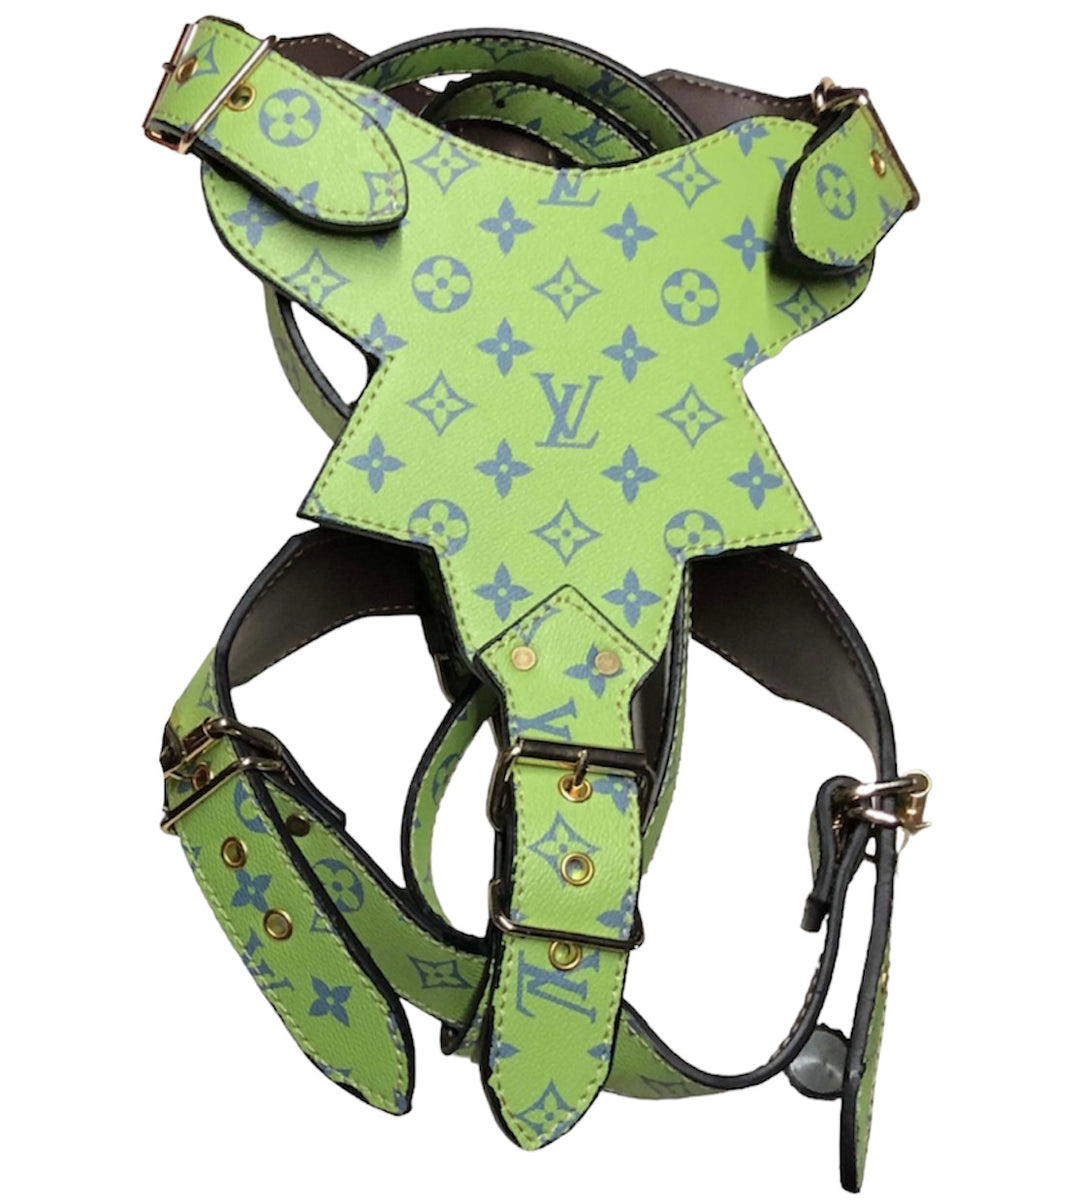 lv dog harness and leash set